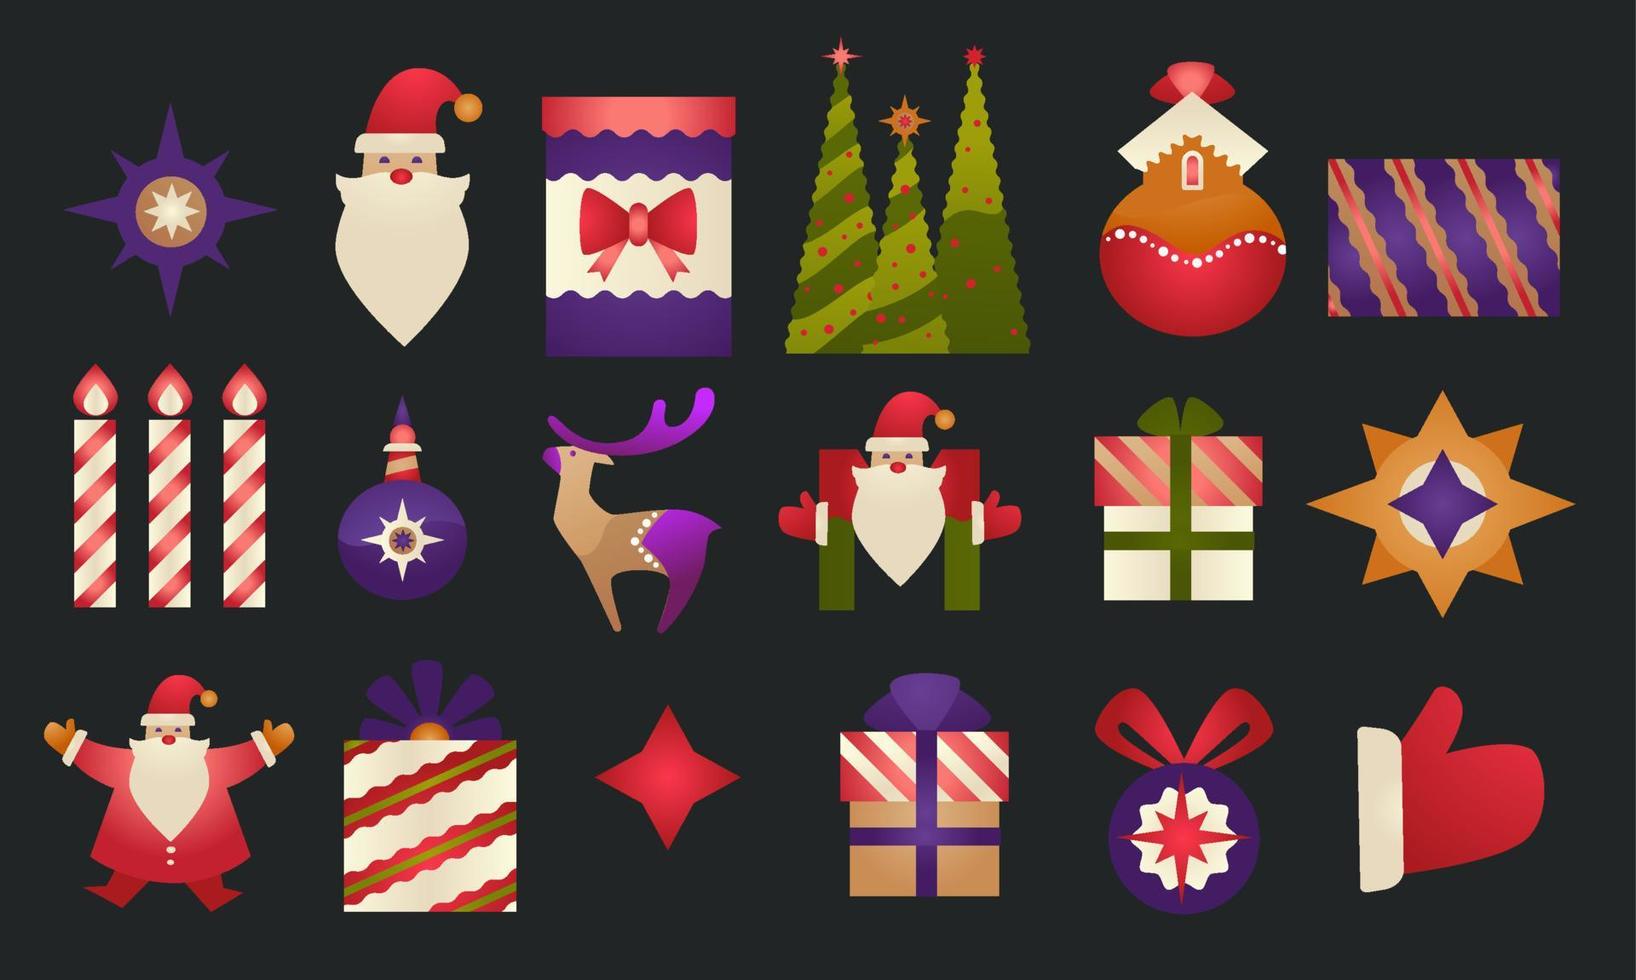 Xmas holiday signs and symbols of Christmas icons vector